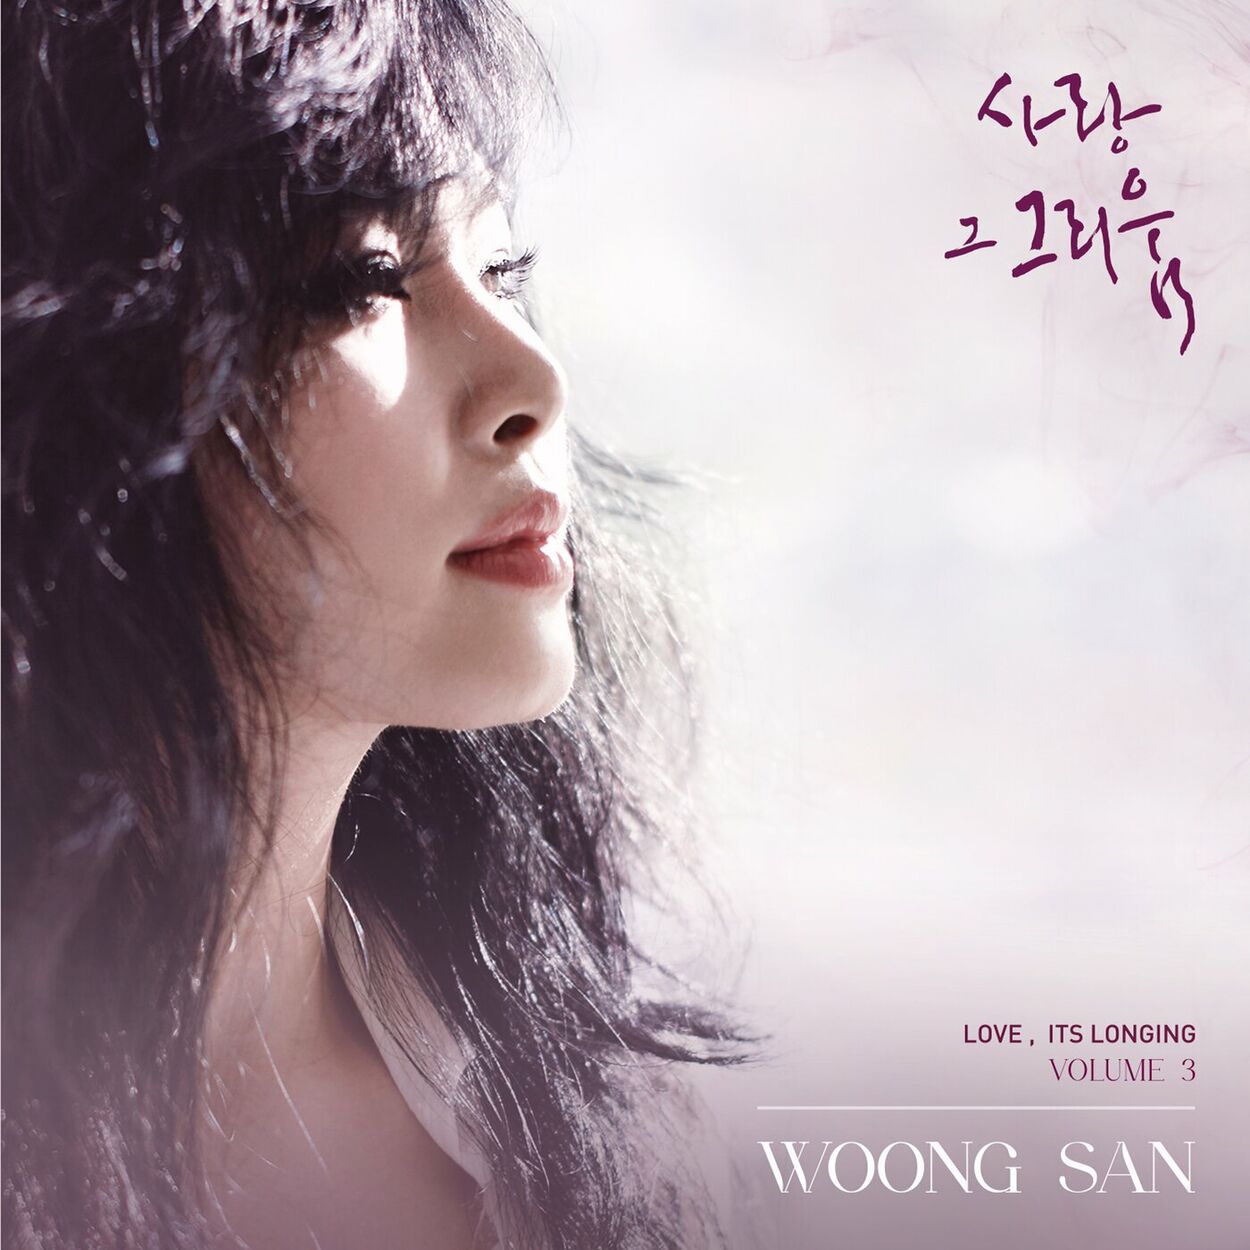 Woongsan – Love, its longing. Vol. 3